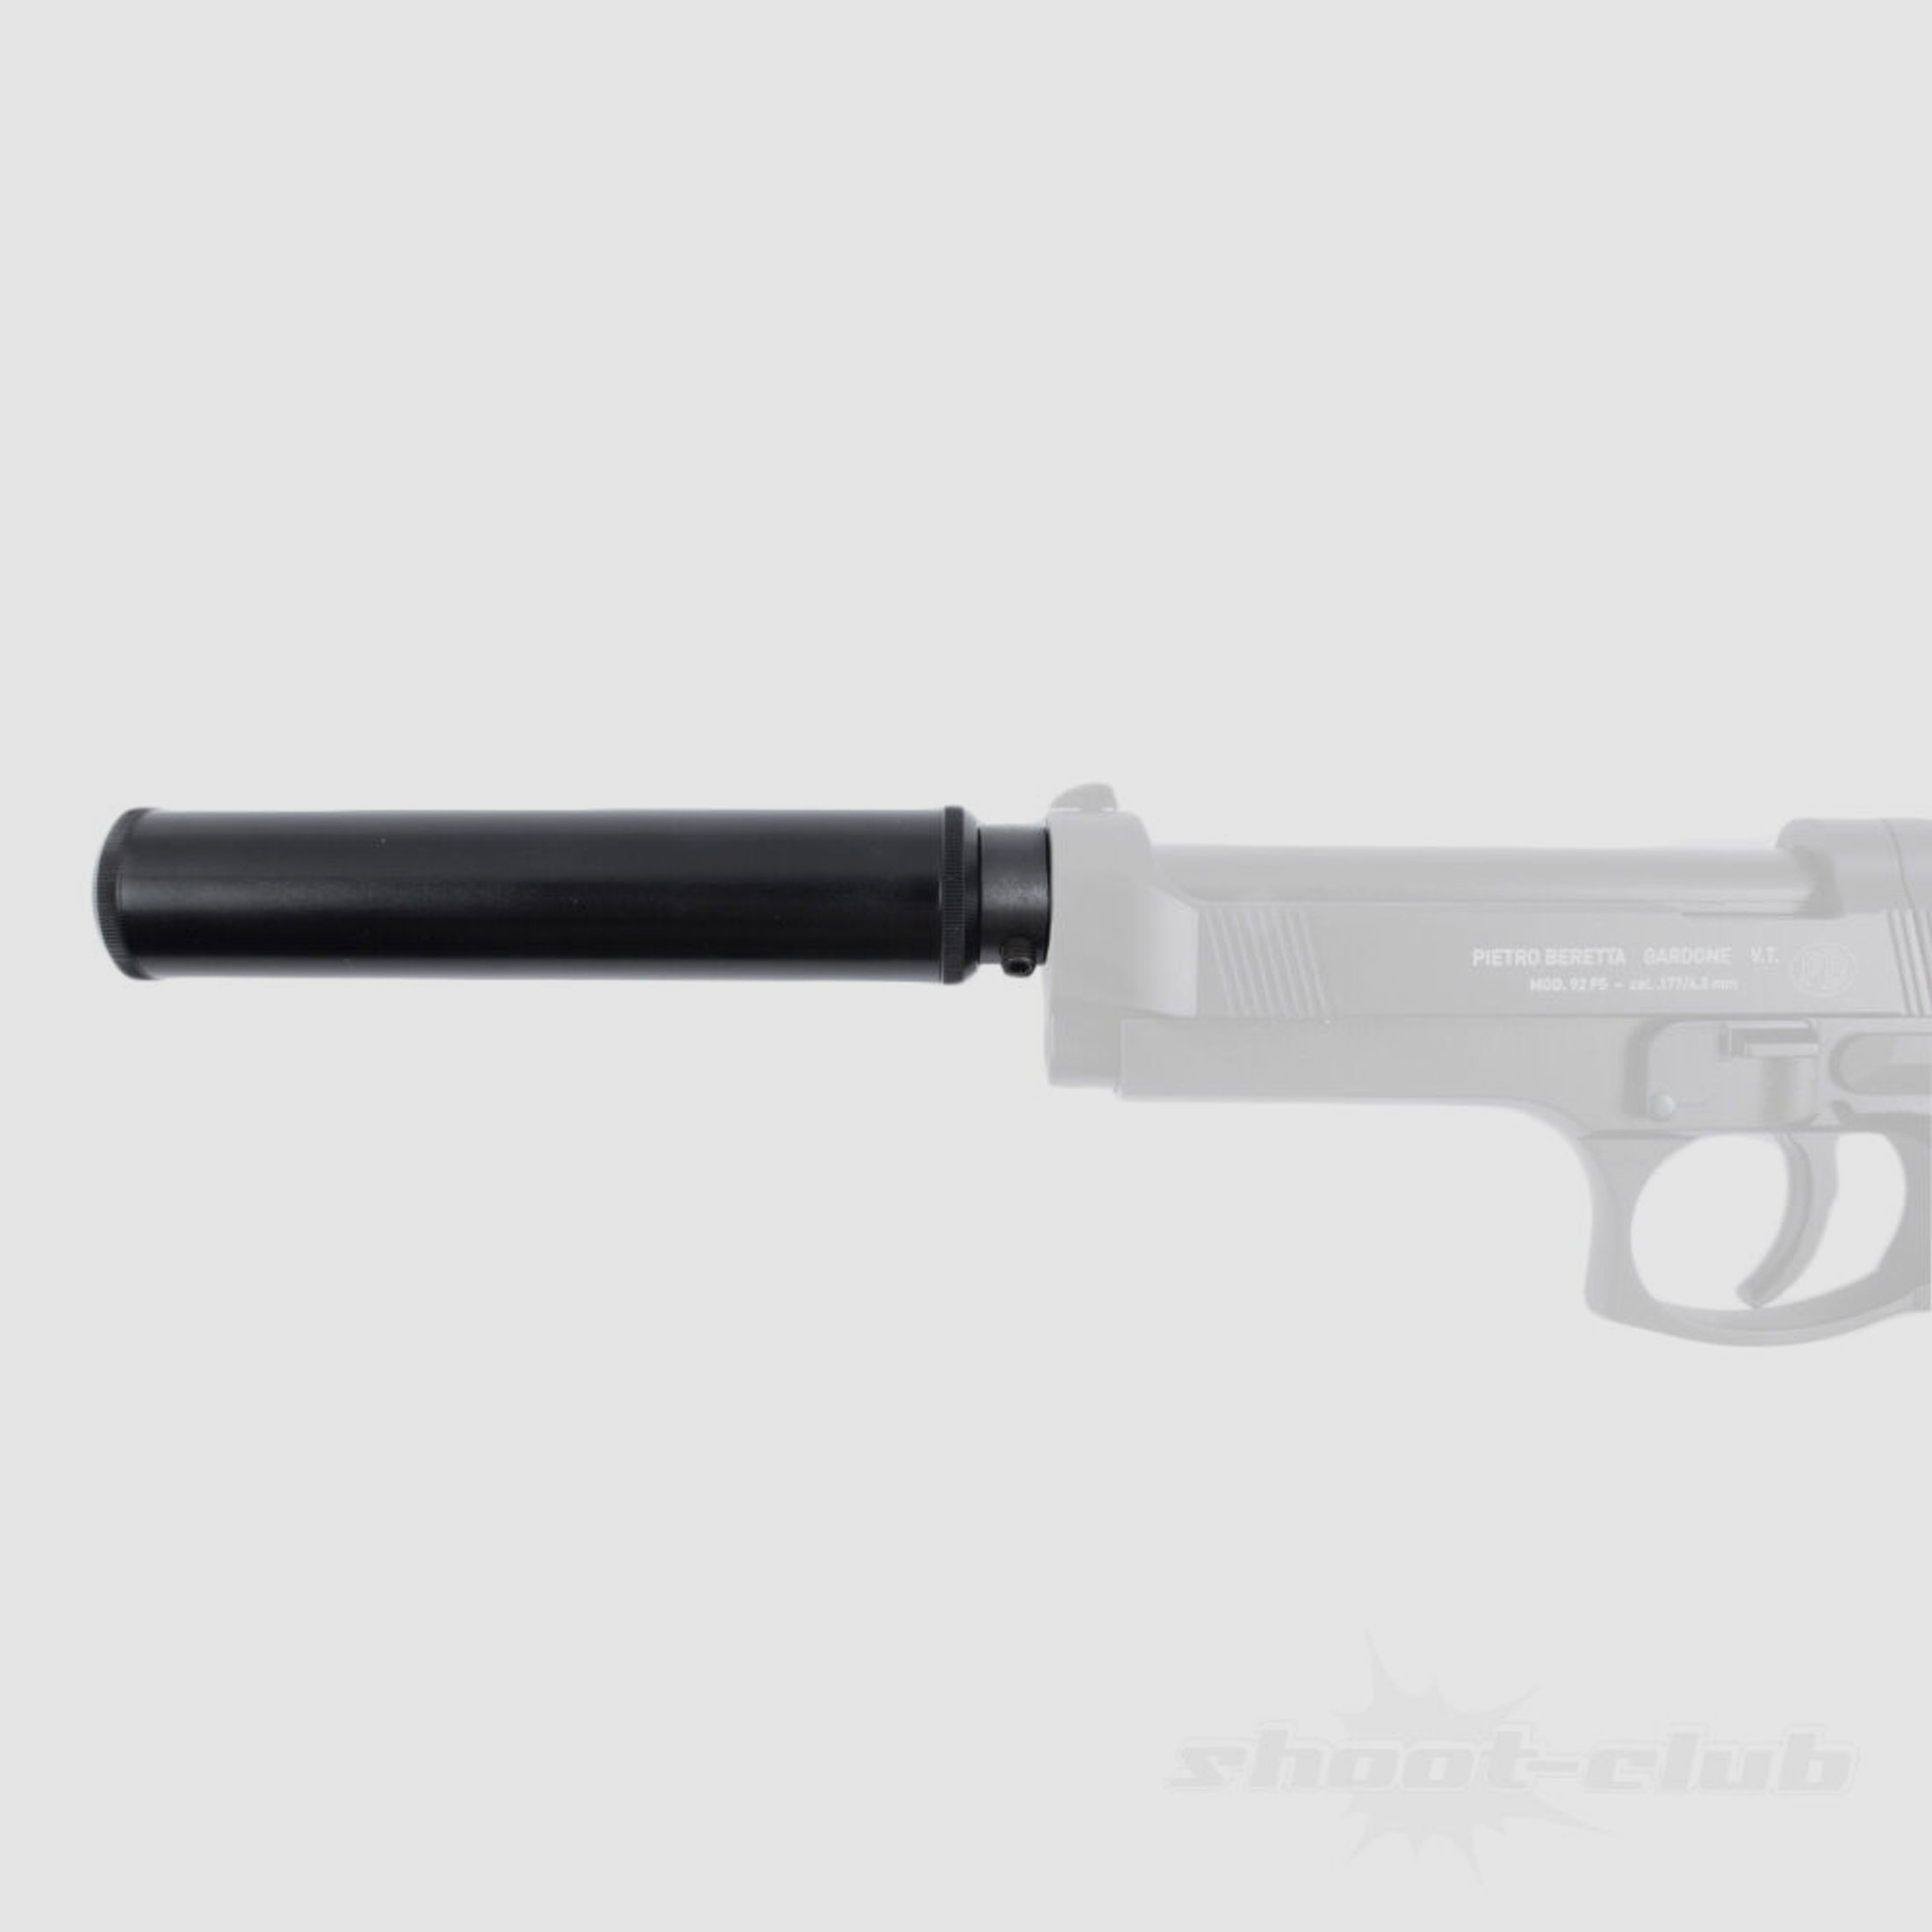 shoXx	 Schalldämpfer + Adapter für Beretta M92 u. Perfecta 32